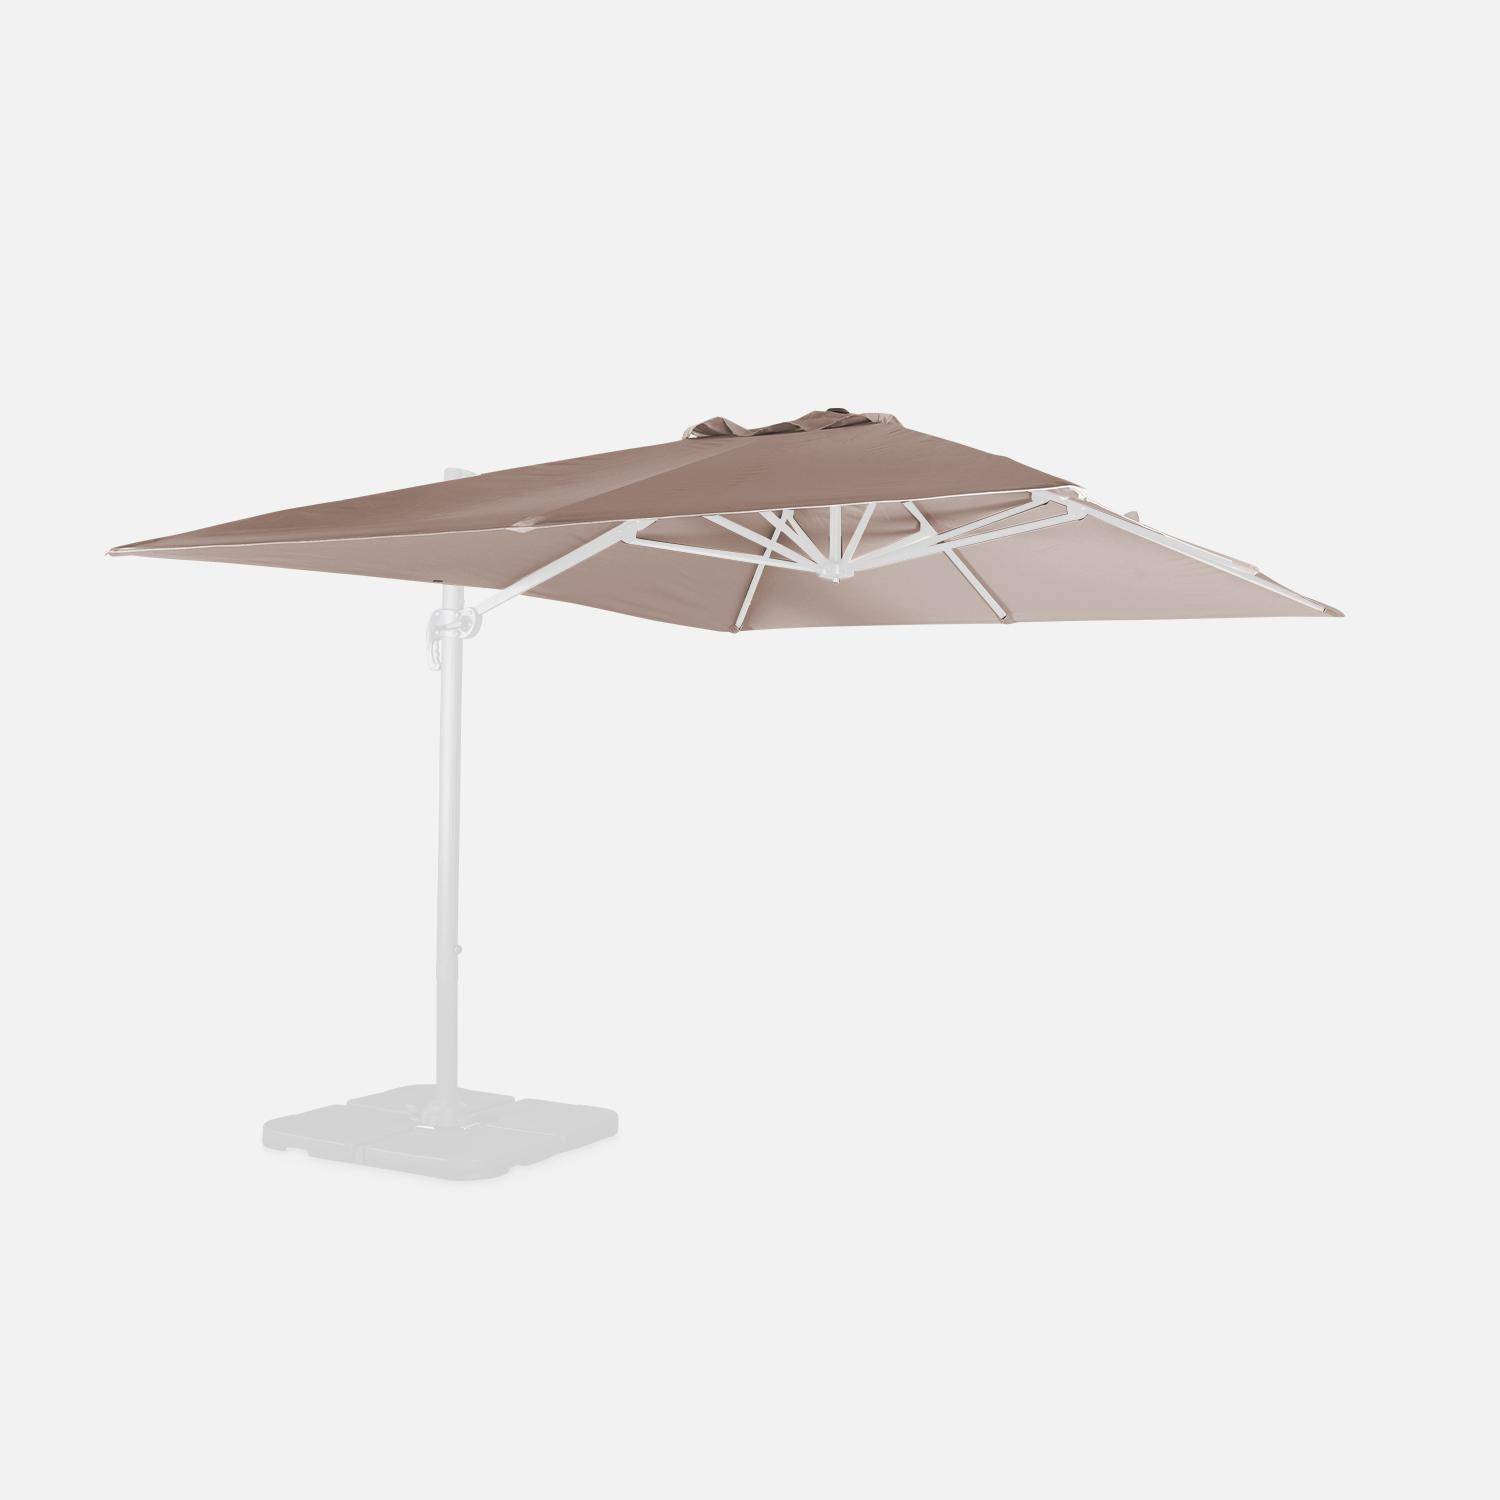 Taupe parasol cloth for 3x4m Wimereux parasol - spare cloth, replacement cloth Photo1